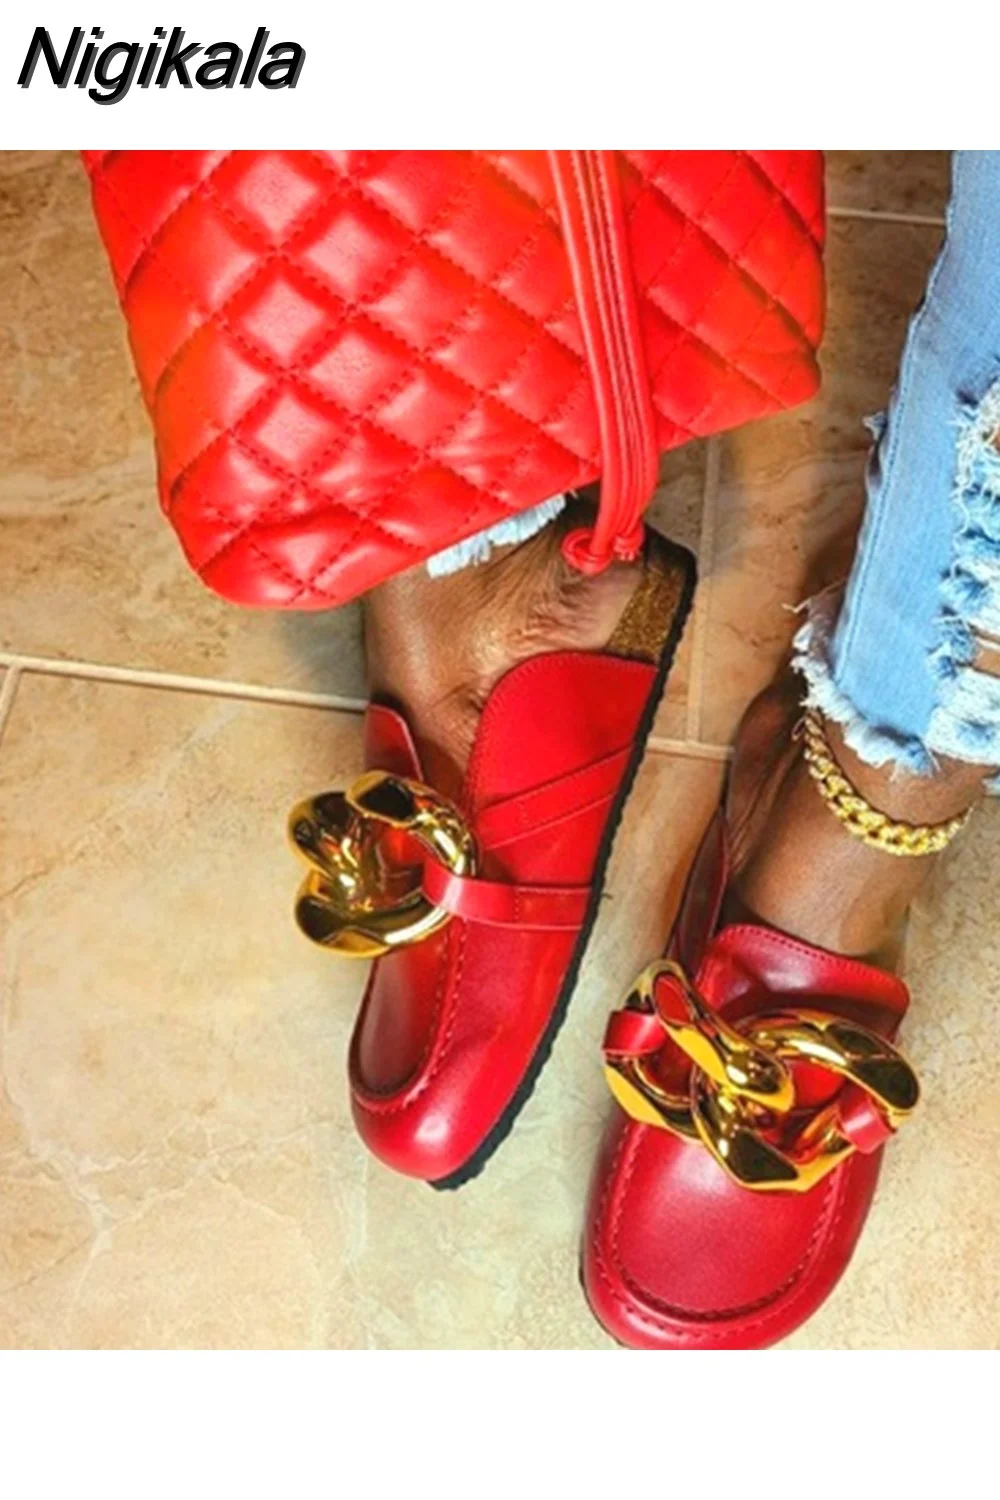 Nigikala Shoes Women Slippers Flats Designer Slides Size 43 White Black Luxury Big Chain Sandals Moda Feminina Verao 2023 Pantoufle 521-0